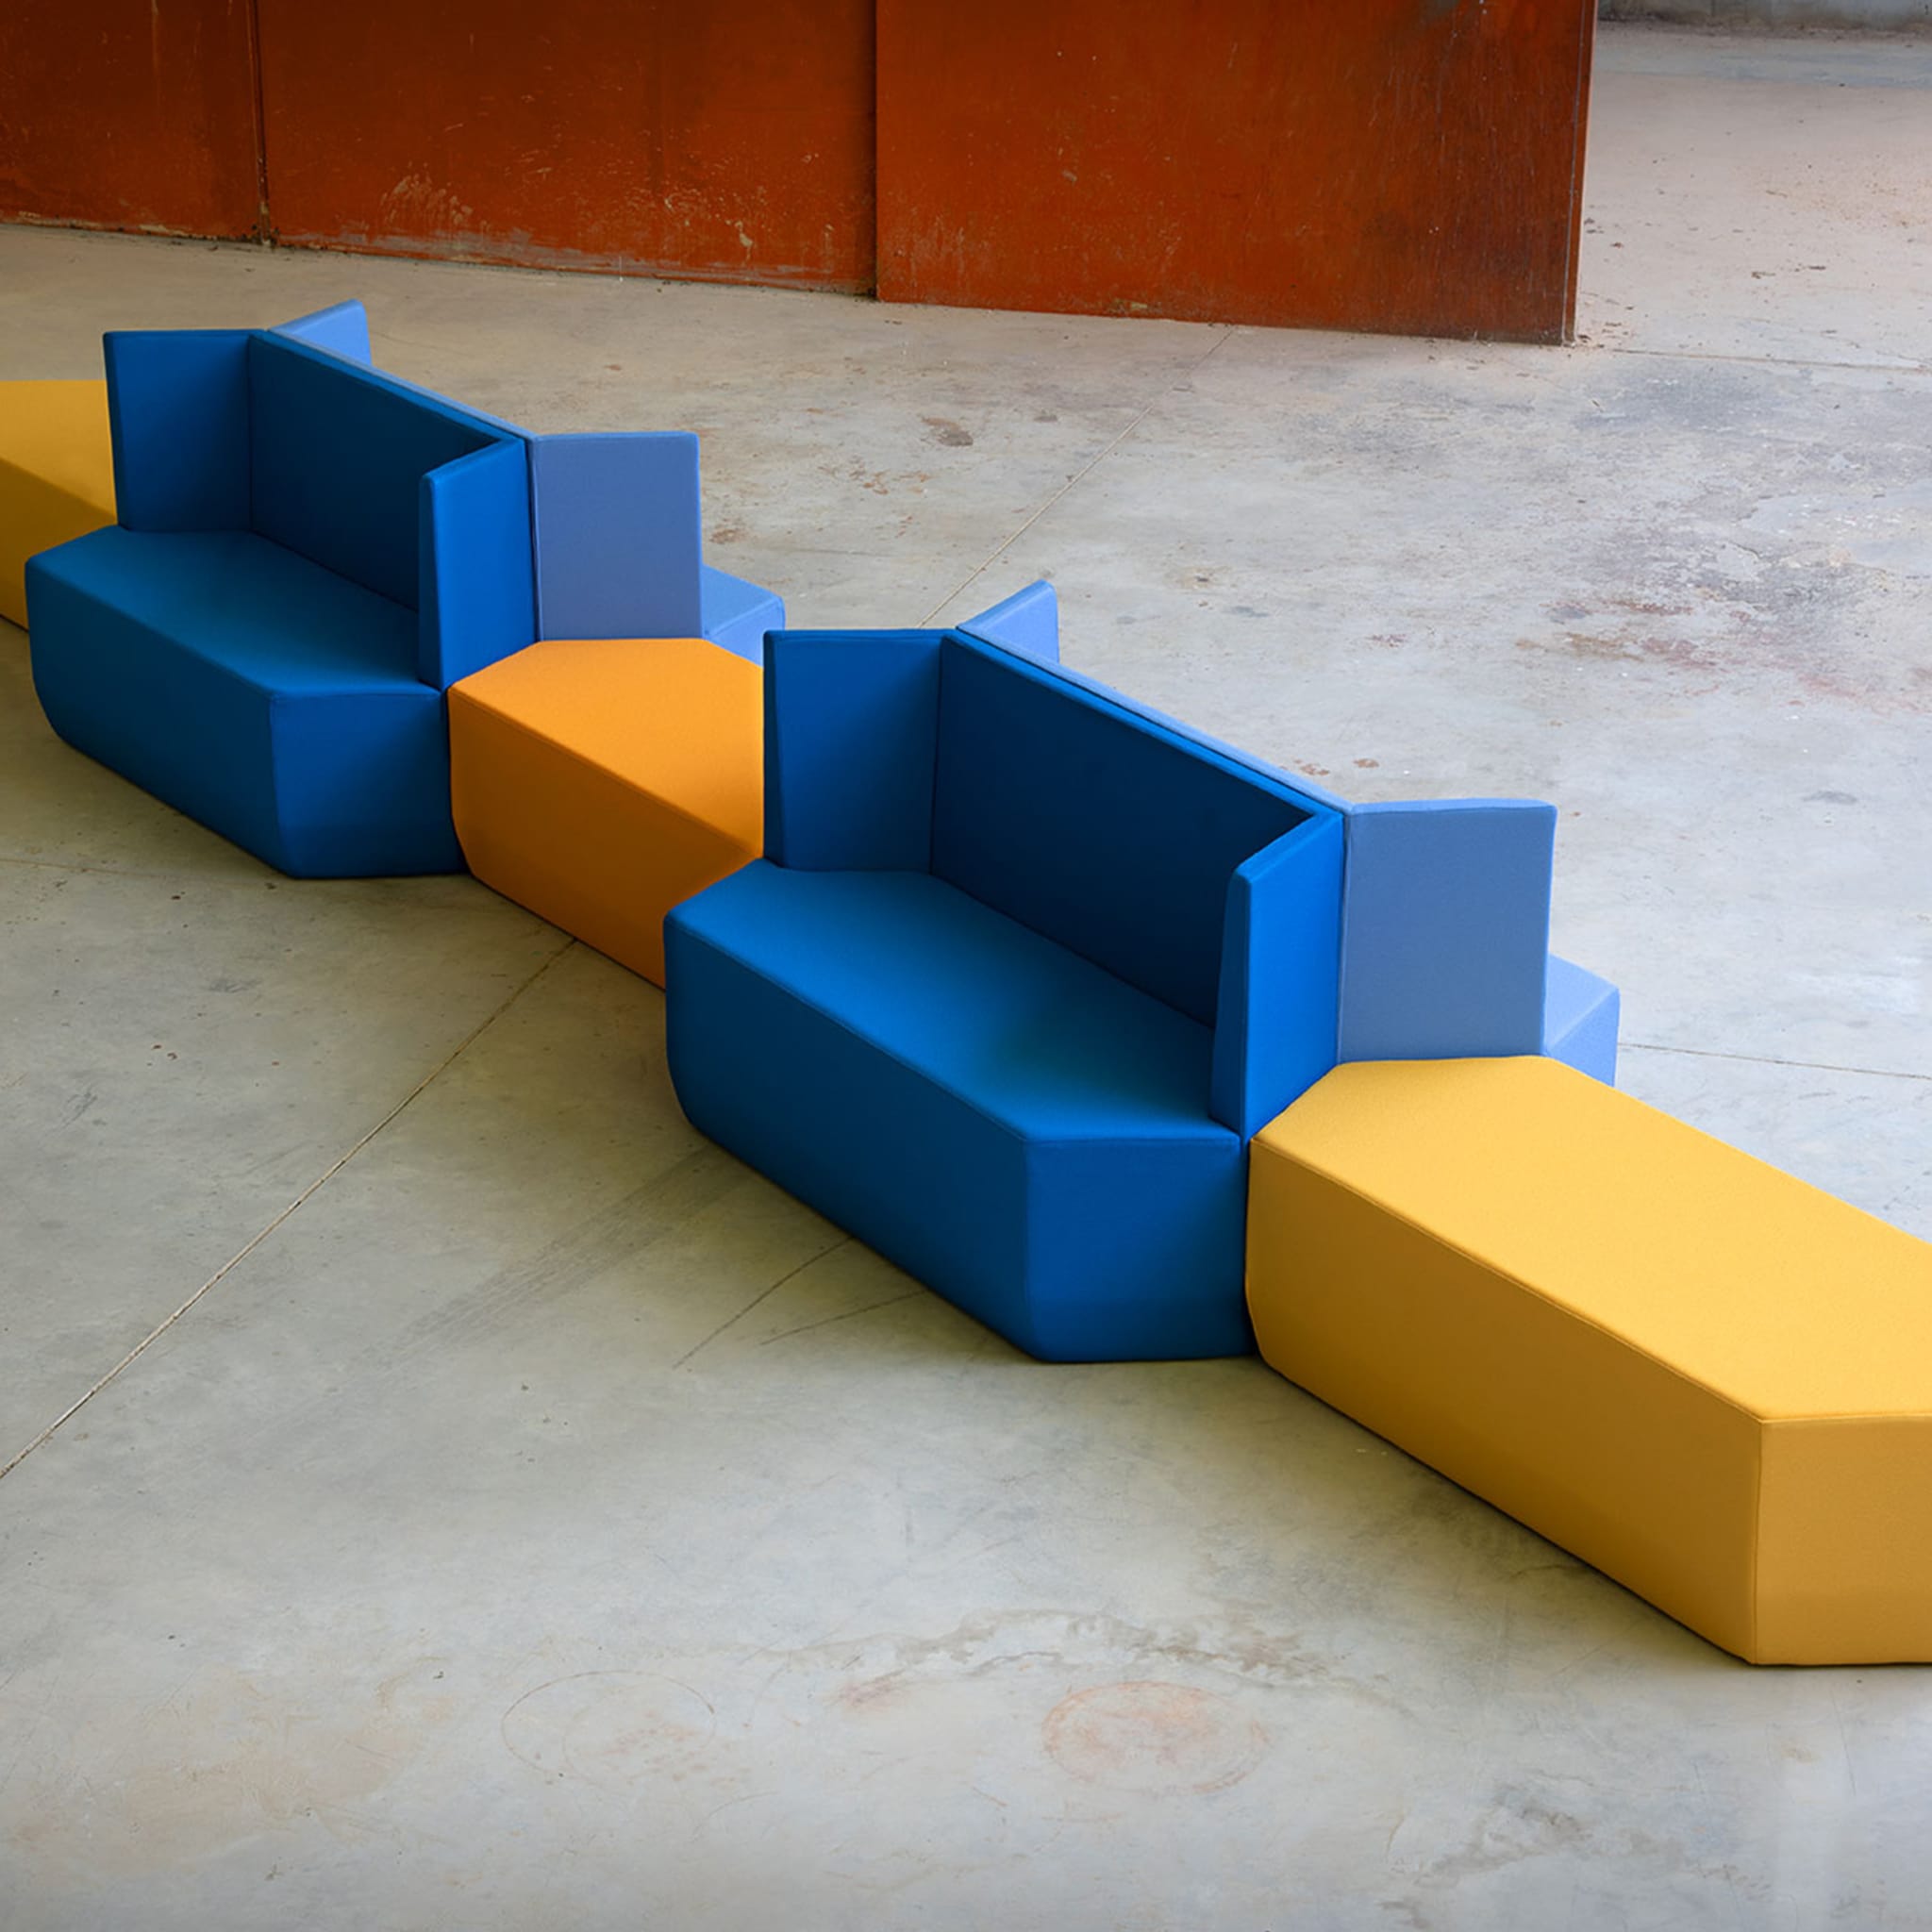 Tigram Hexagonal Mustard Bench by Italo Pertichini - Alternative view 3